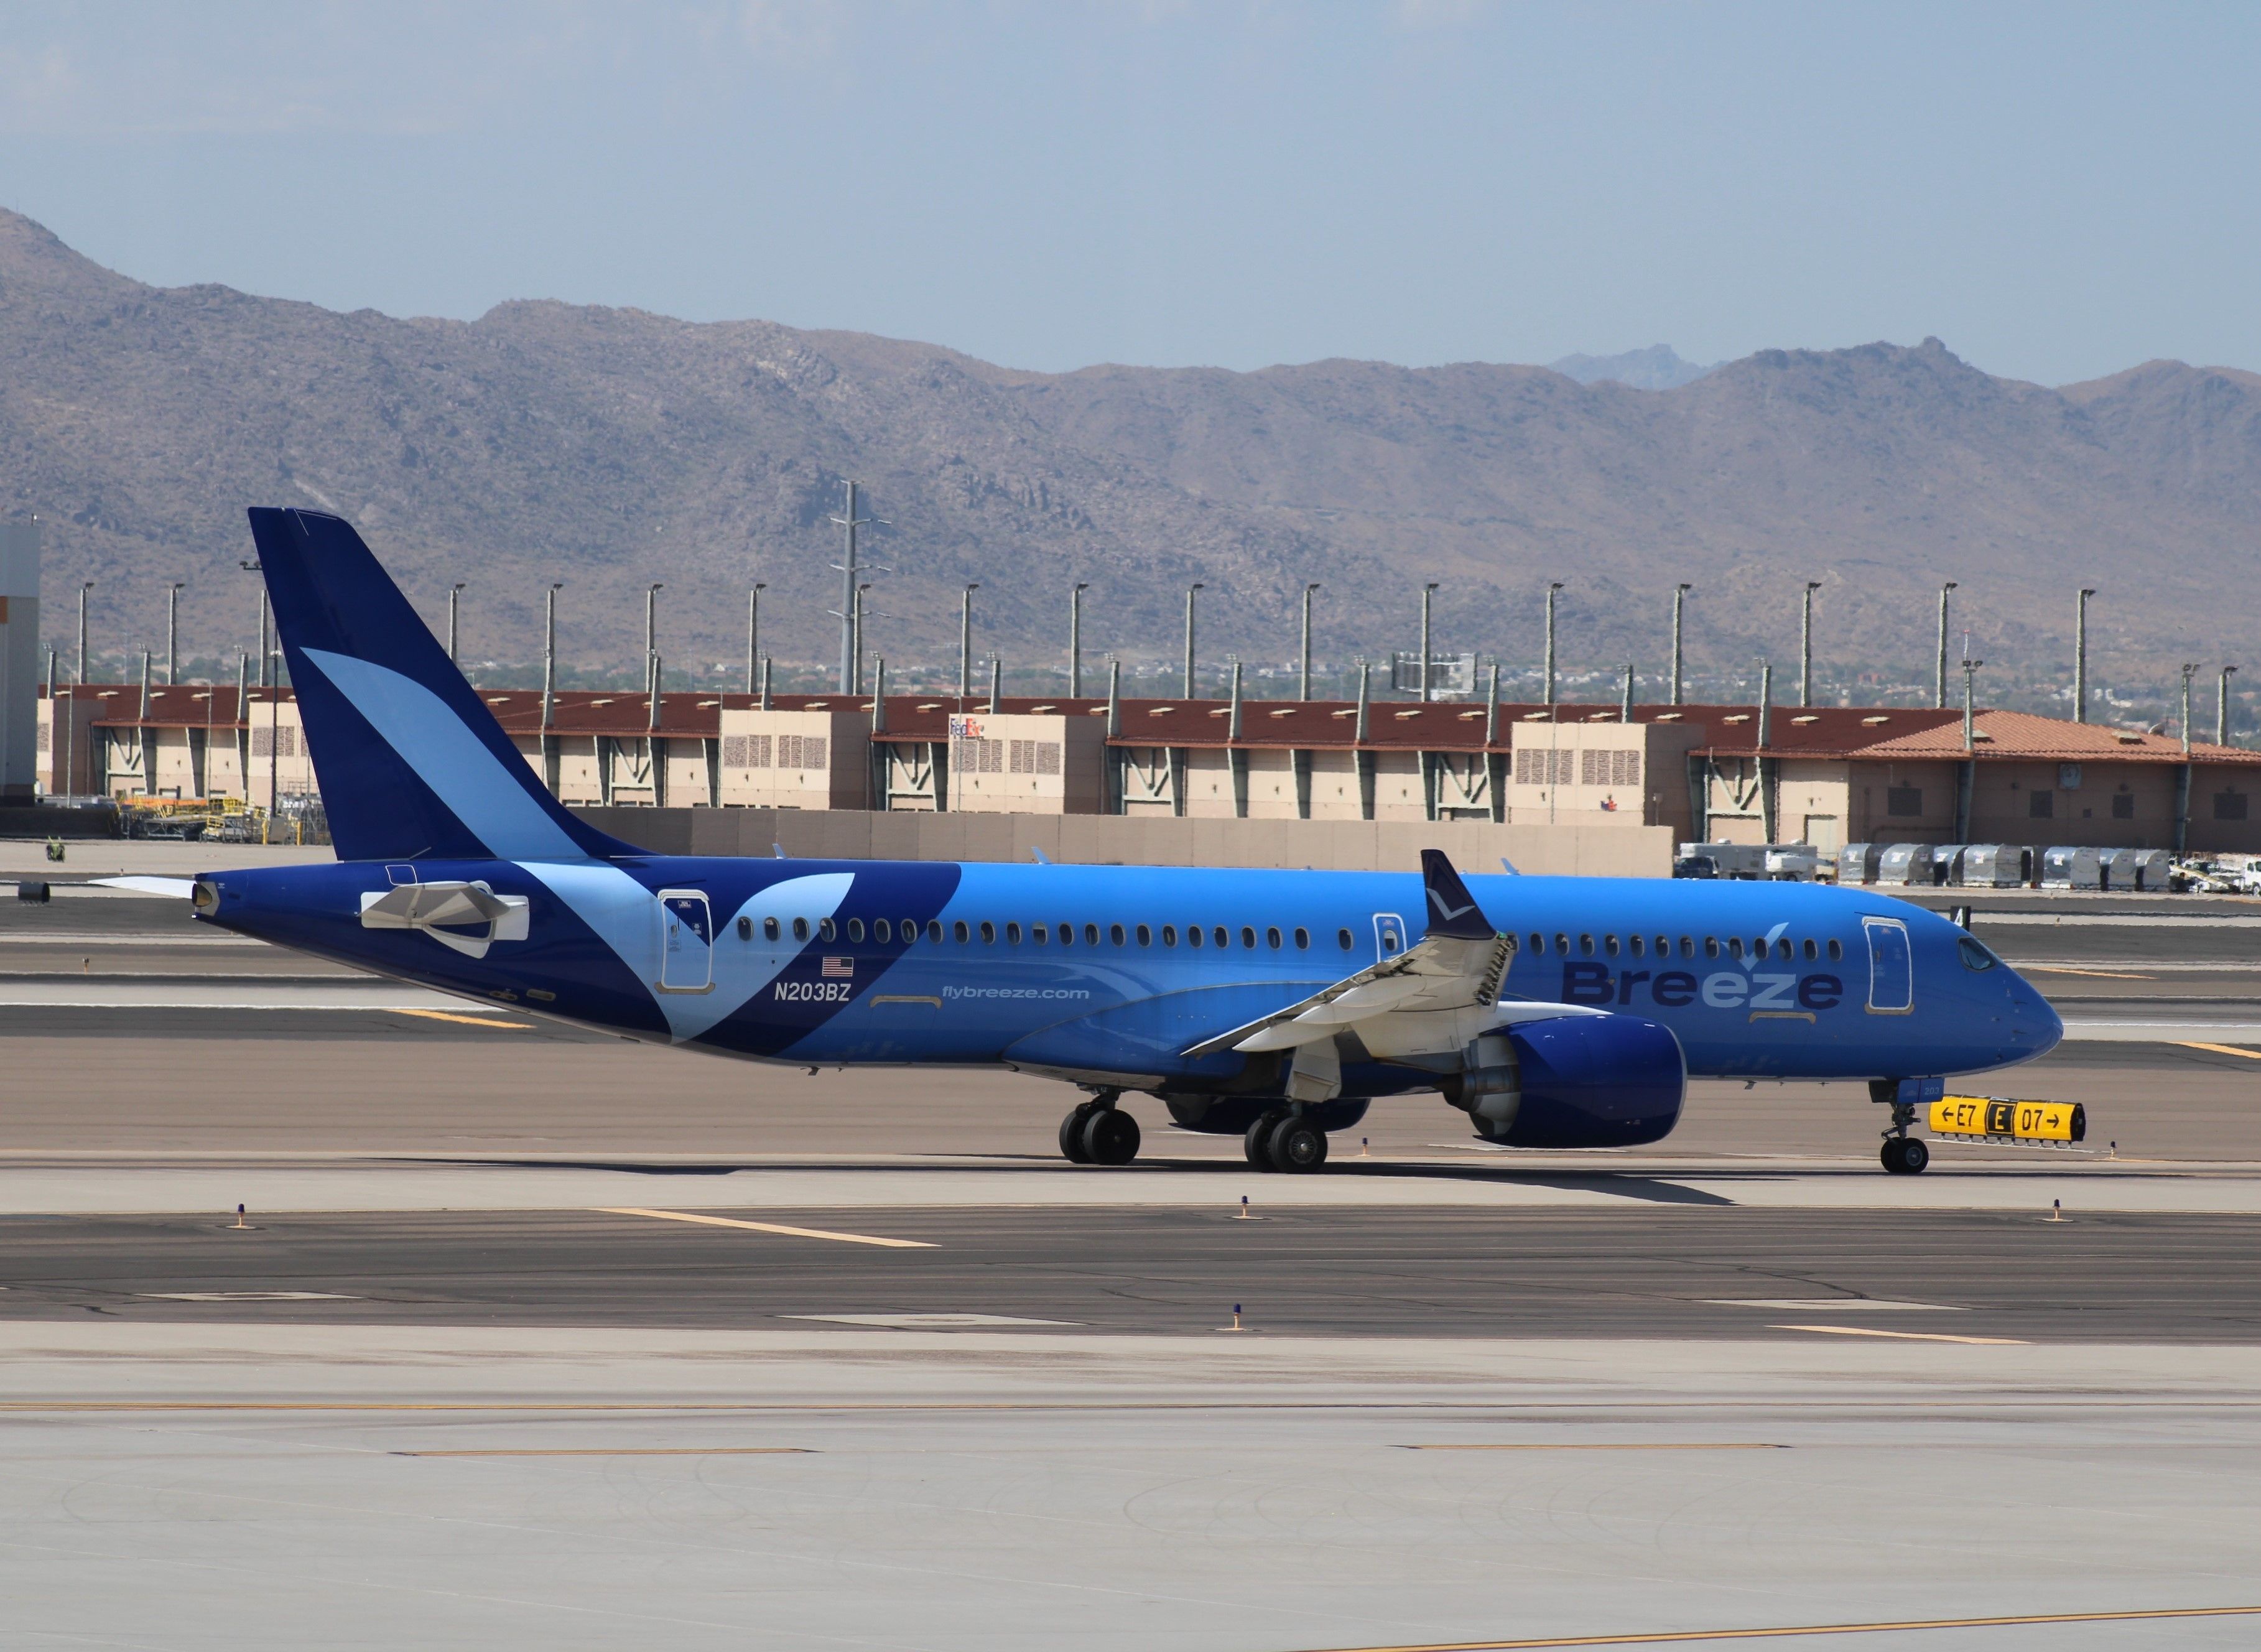 Breeze Airways Airbus A220-300 at Phoenix Sky Harbor International Airport.